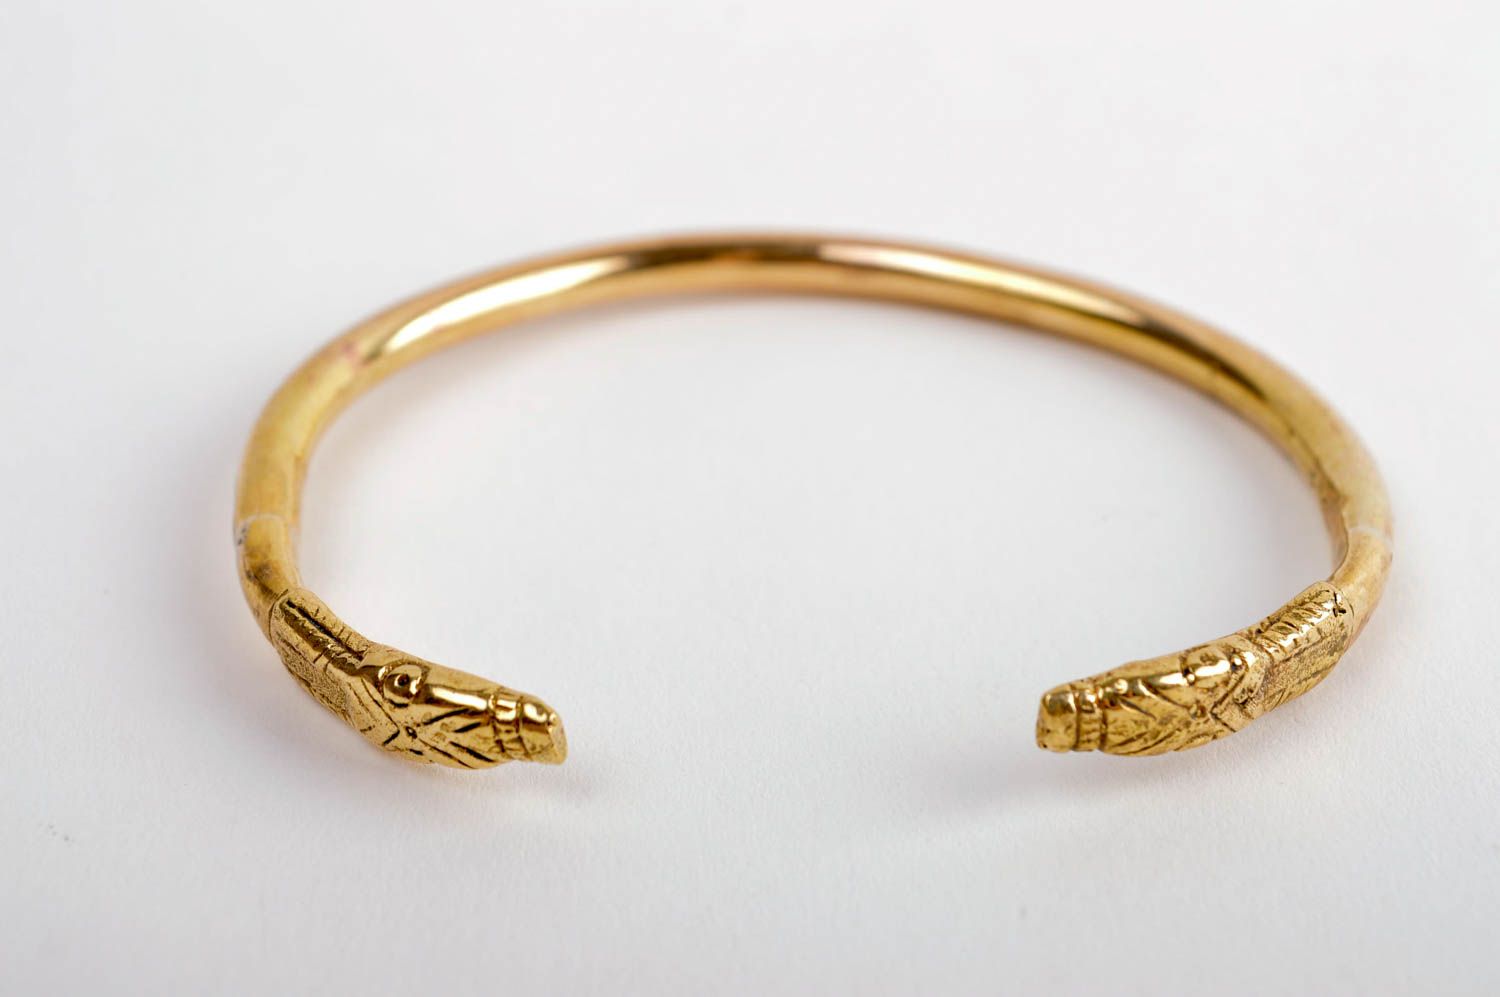 Handmade brass bracelet unusual designer bracelet cute wrist accessory photo 2